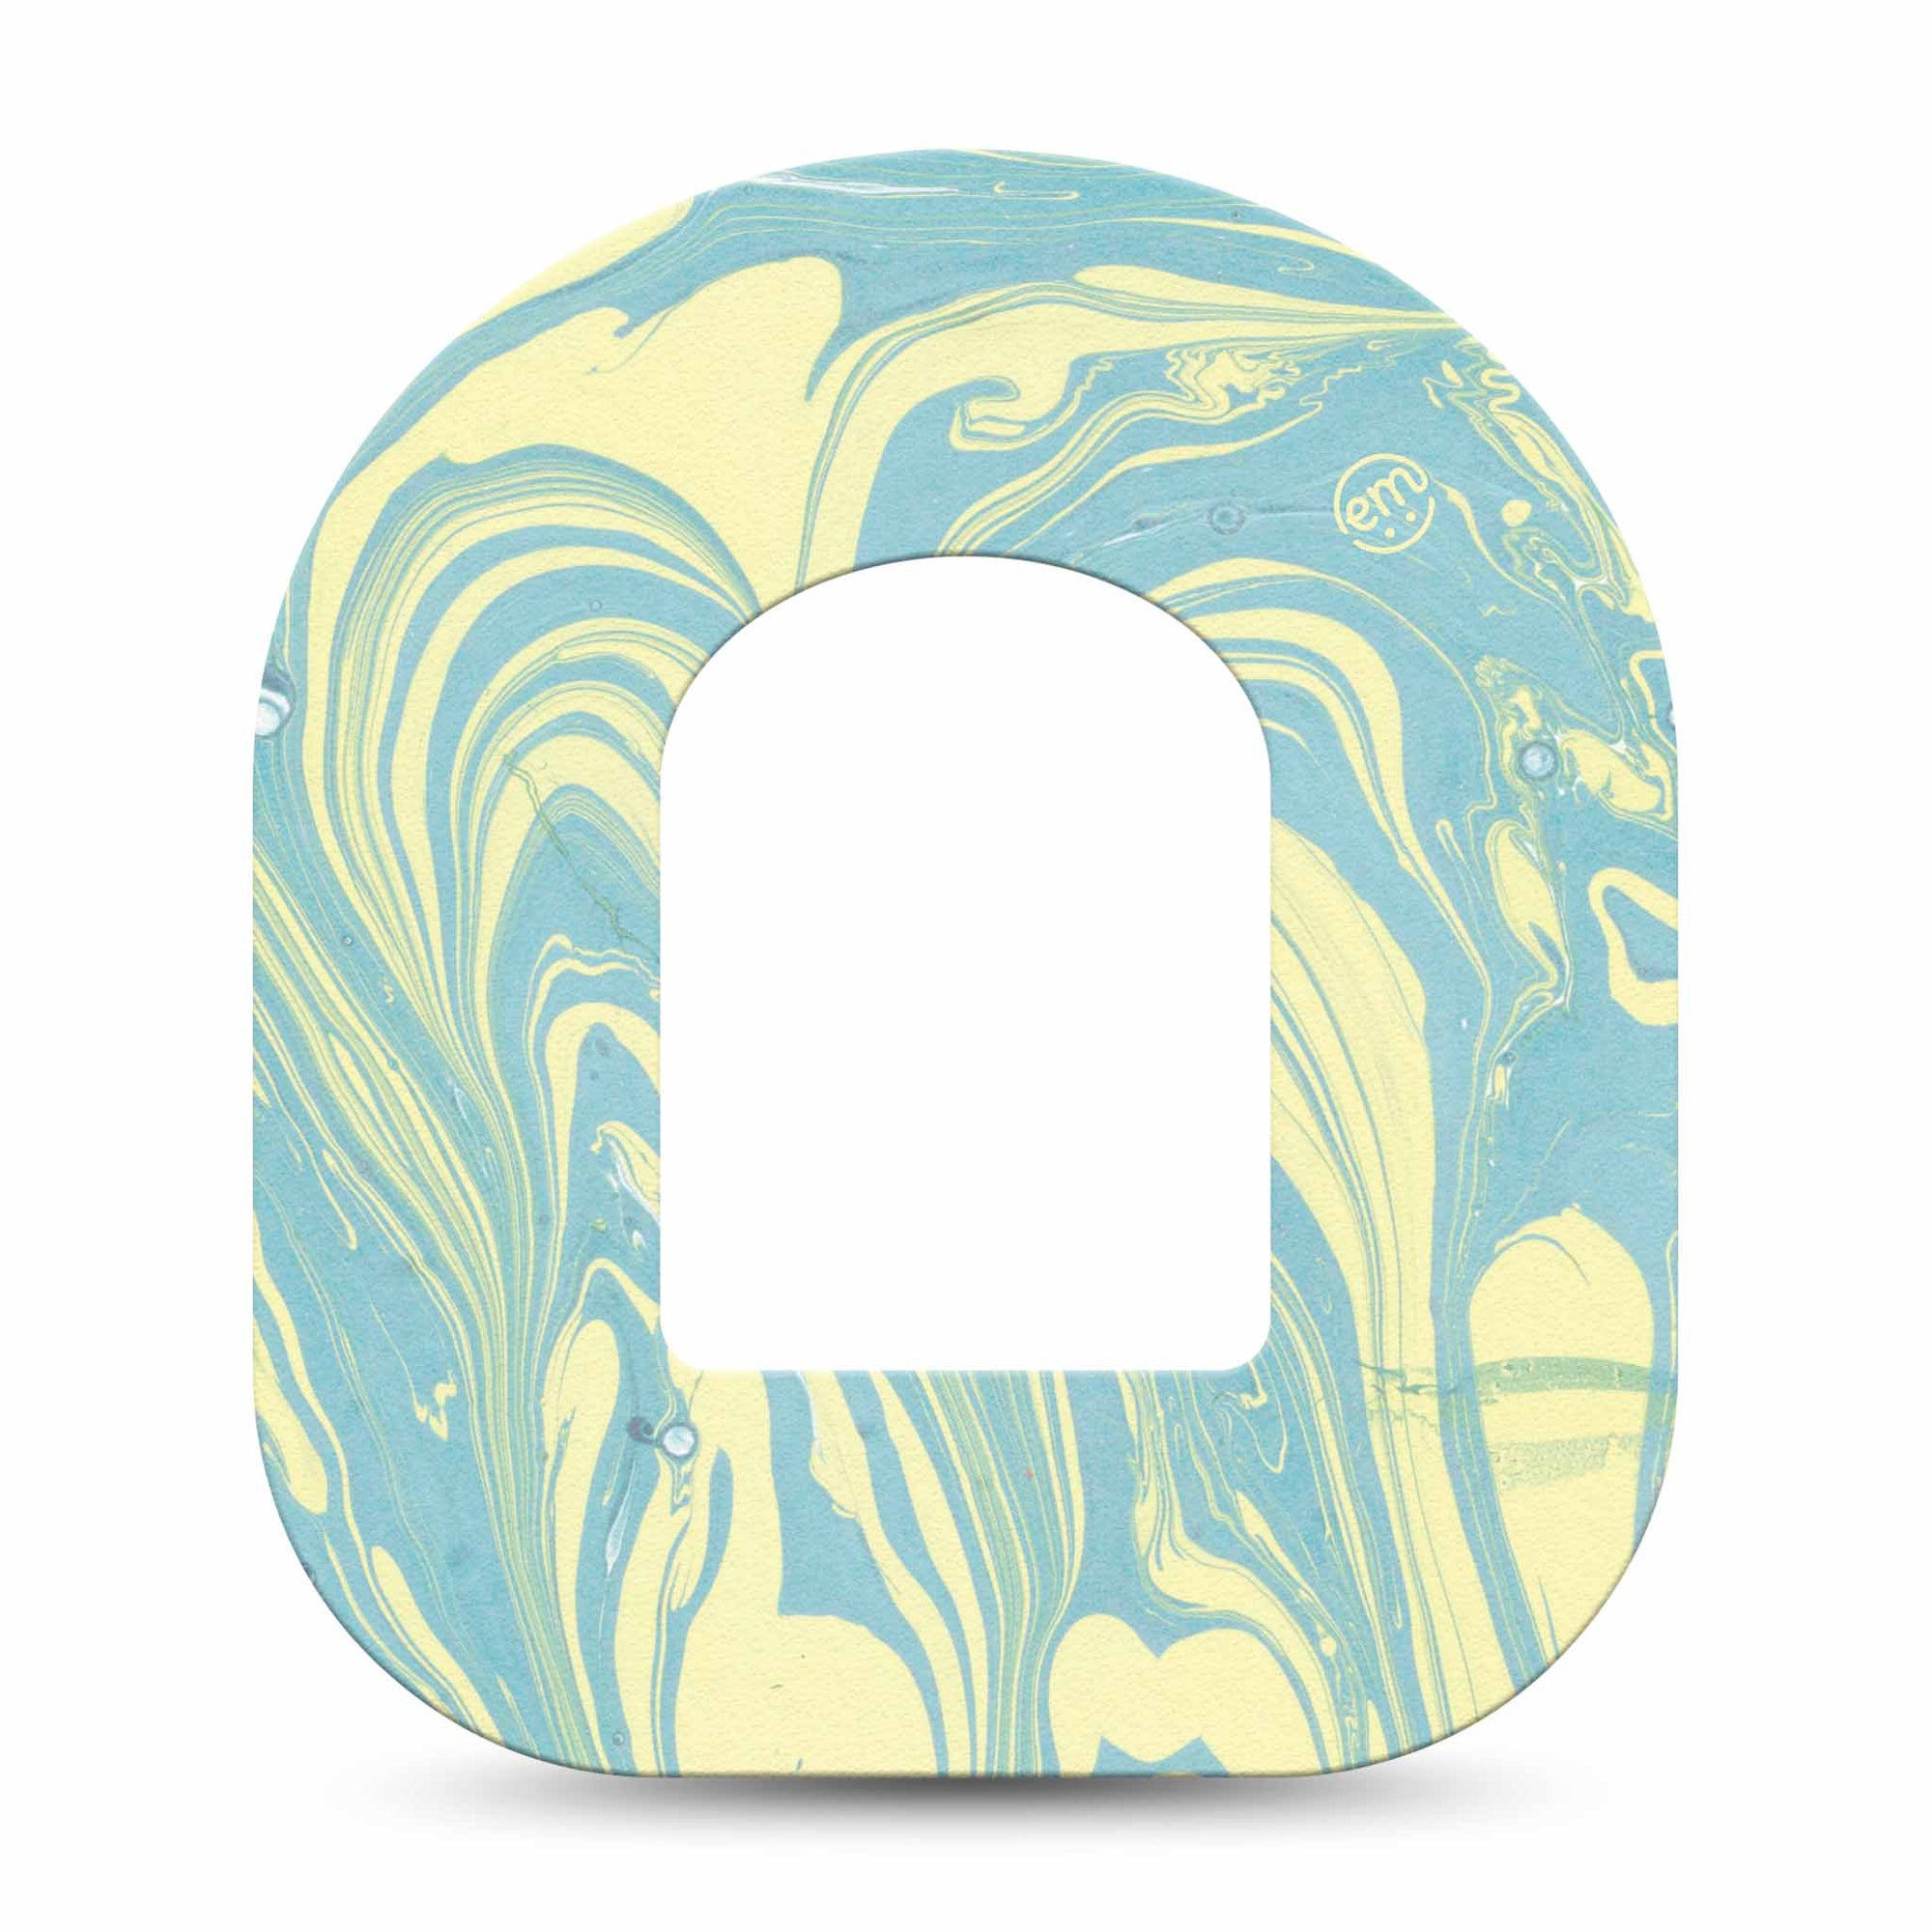 ExpressionMed Mixed Playdough Omnipod Overlay Tape, Single, Fun Playdough Design Pump Tape